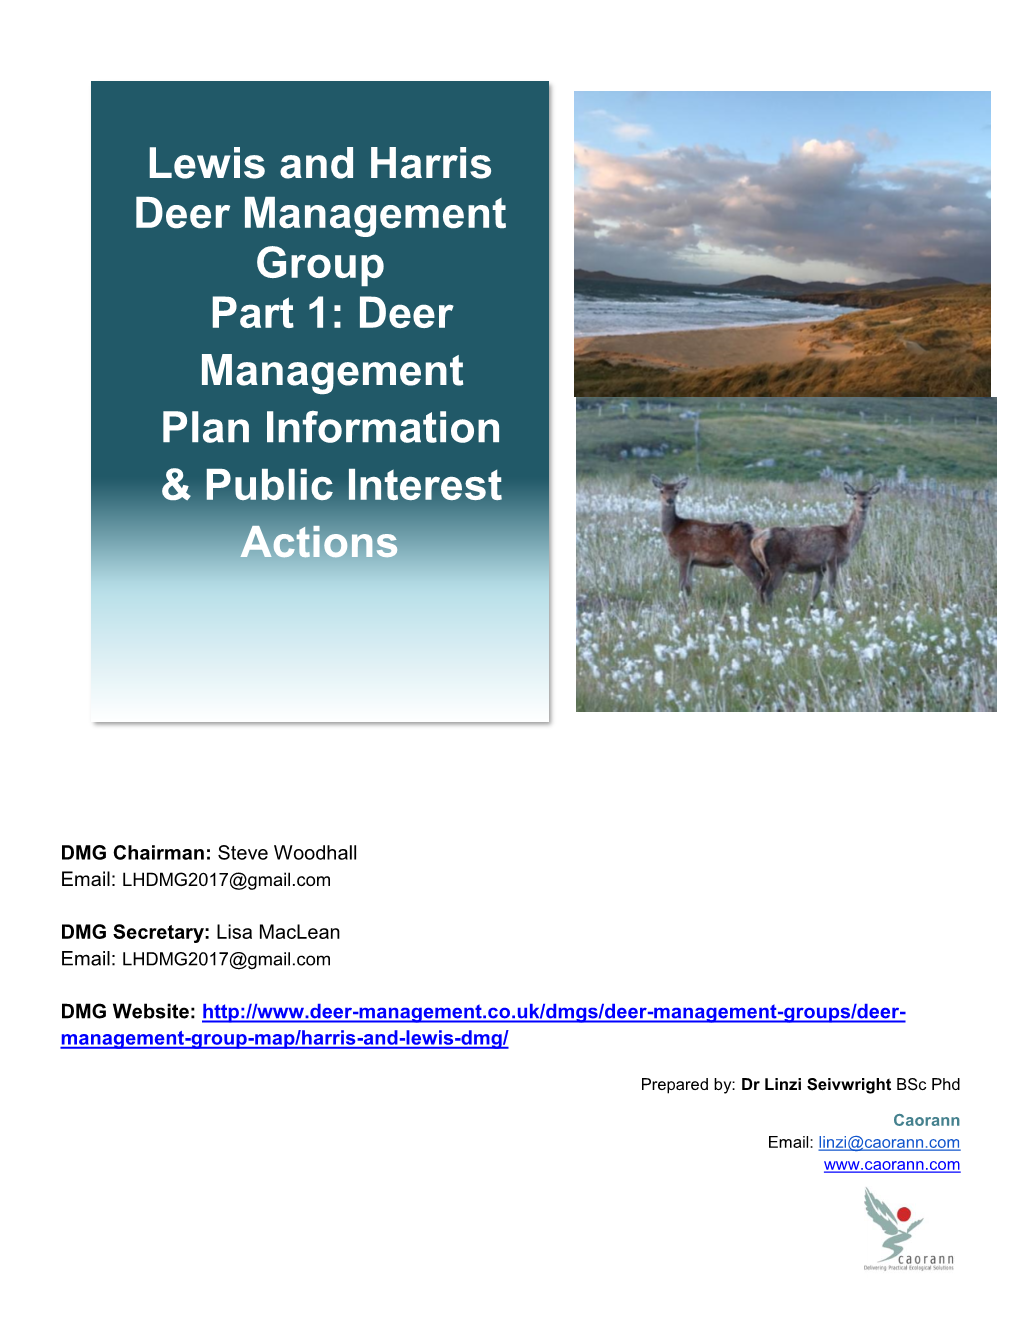 Lewis and Harris Deer Management Group Part 1: Deer Management Plan Information & Public Interest Actions